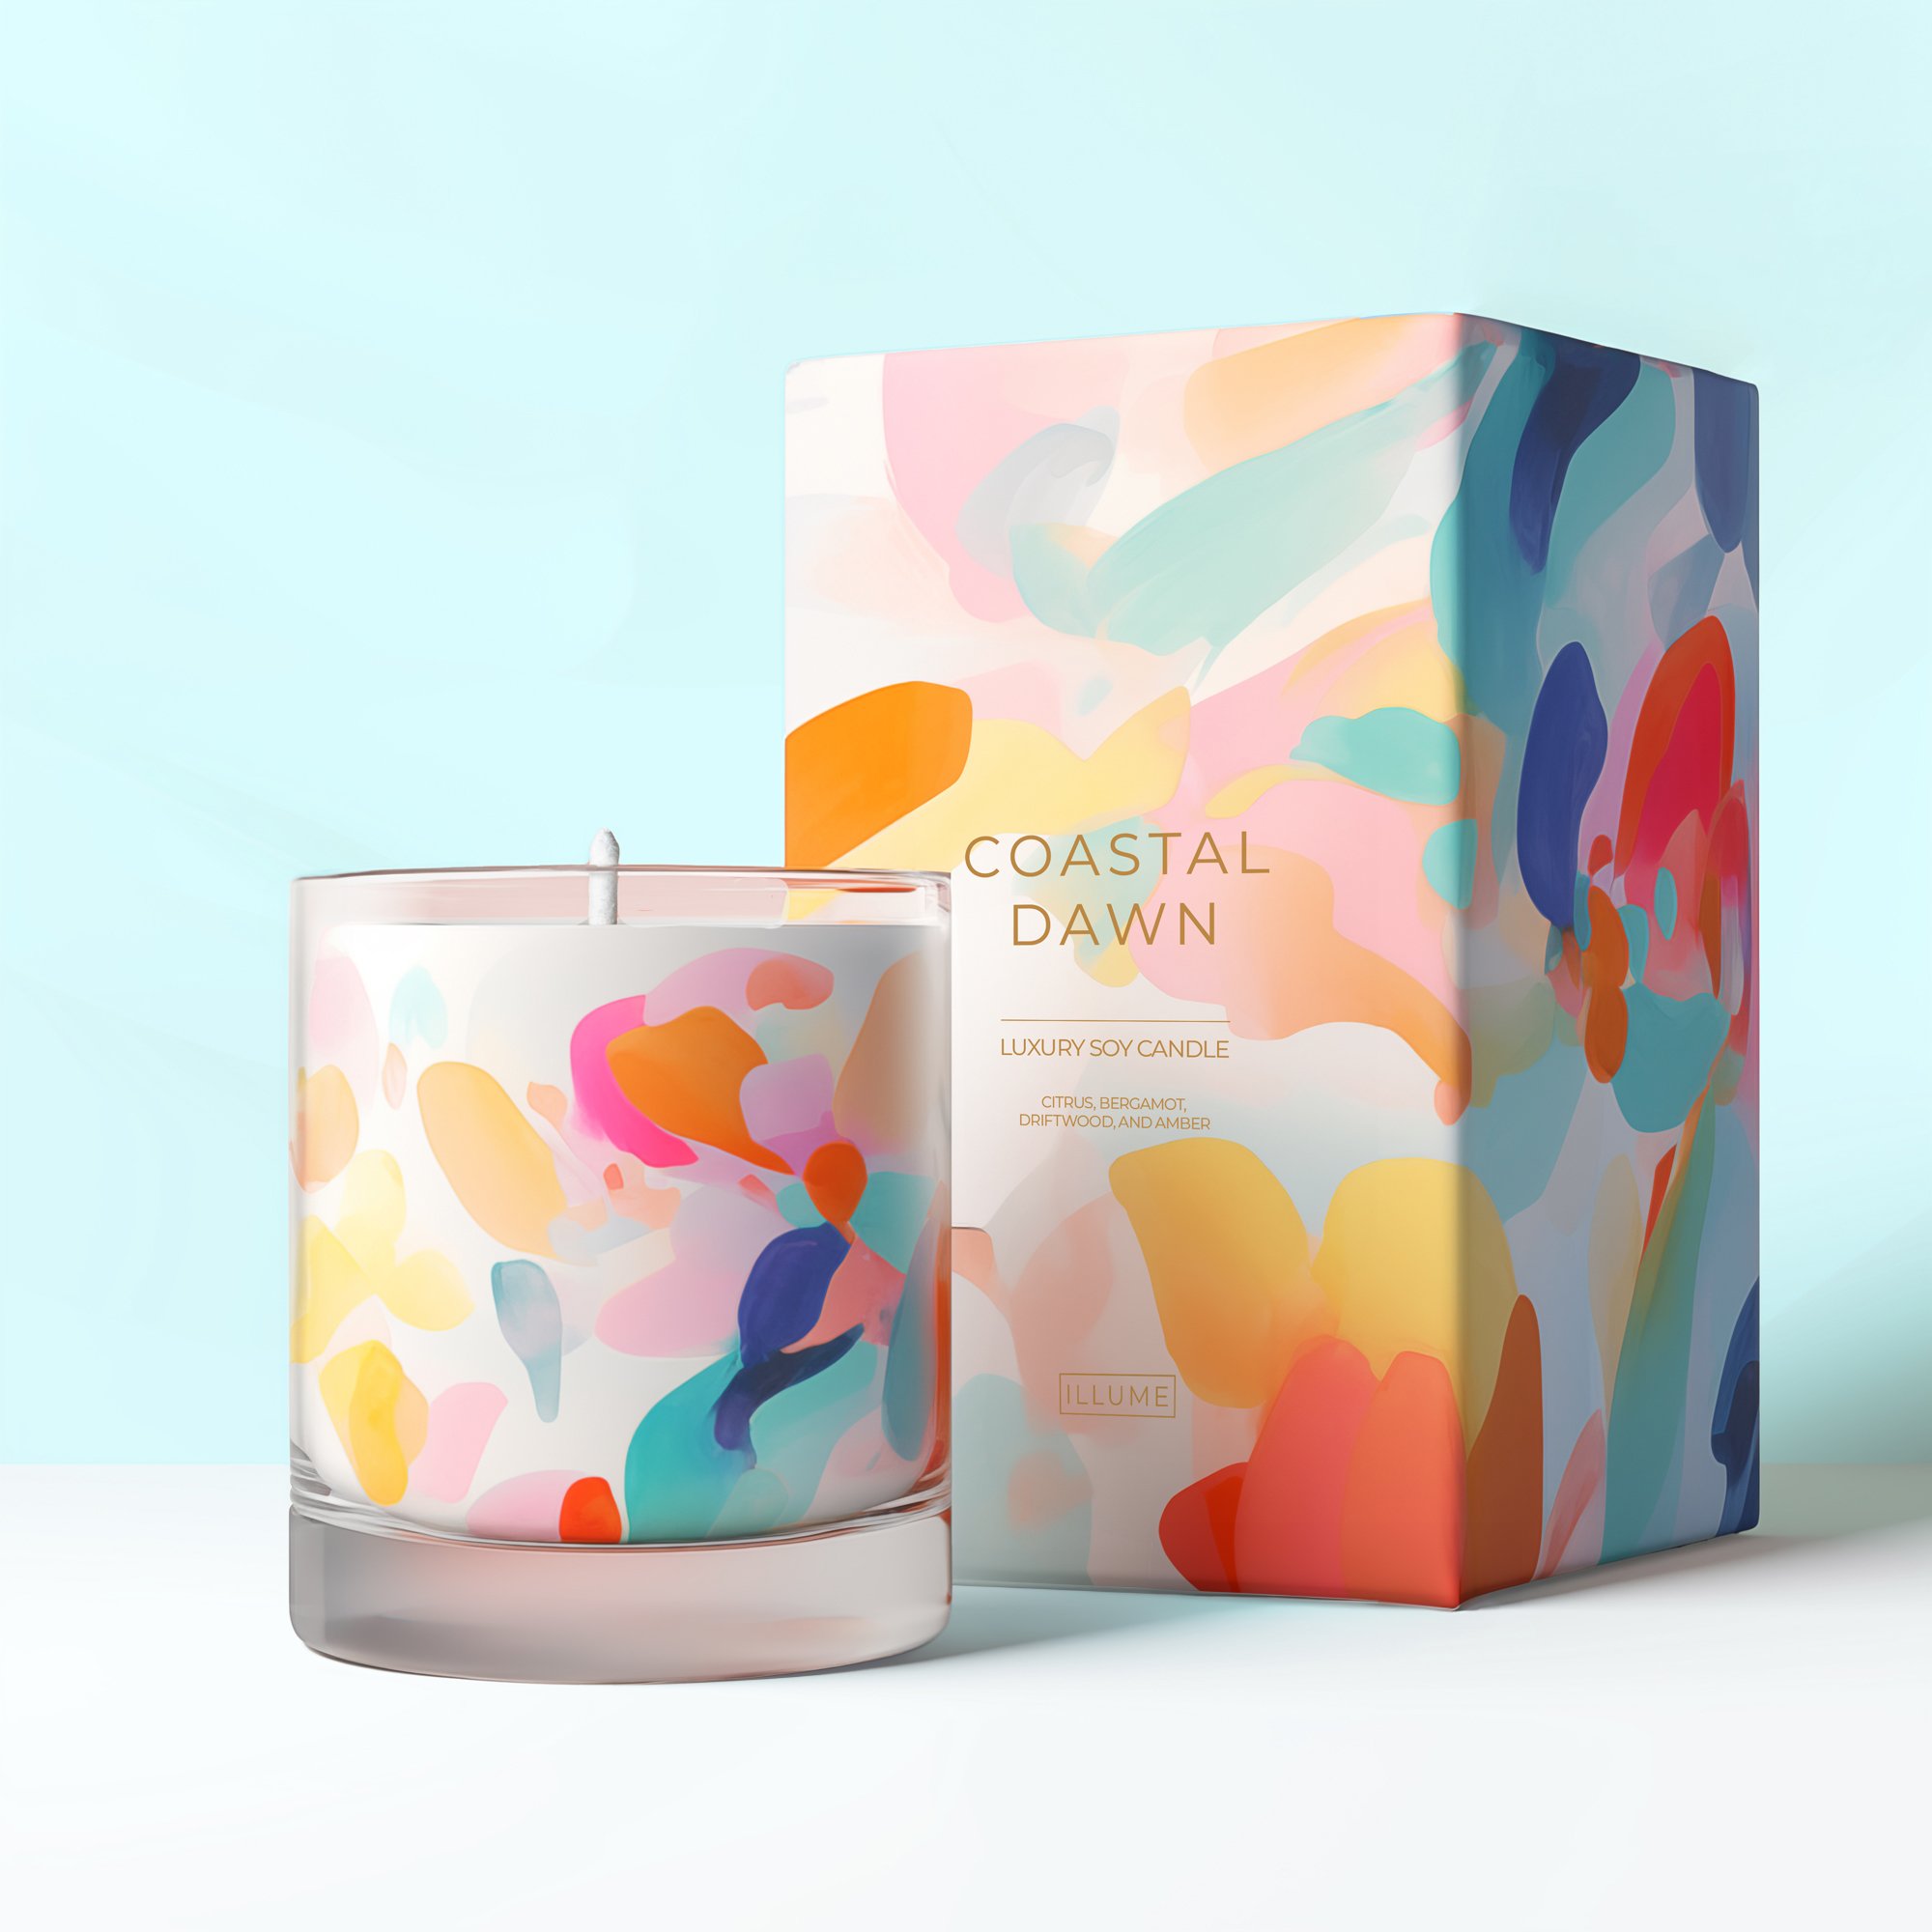 Coastal Dawn candle packaging